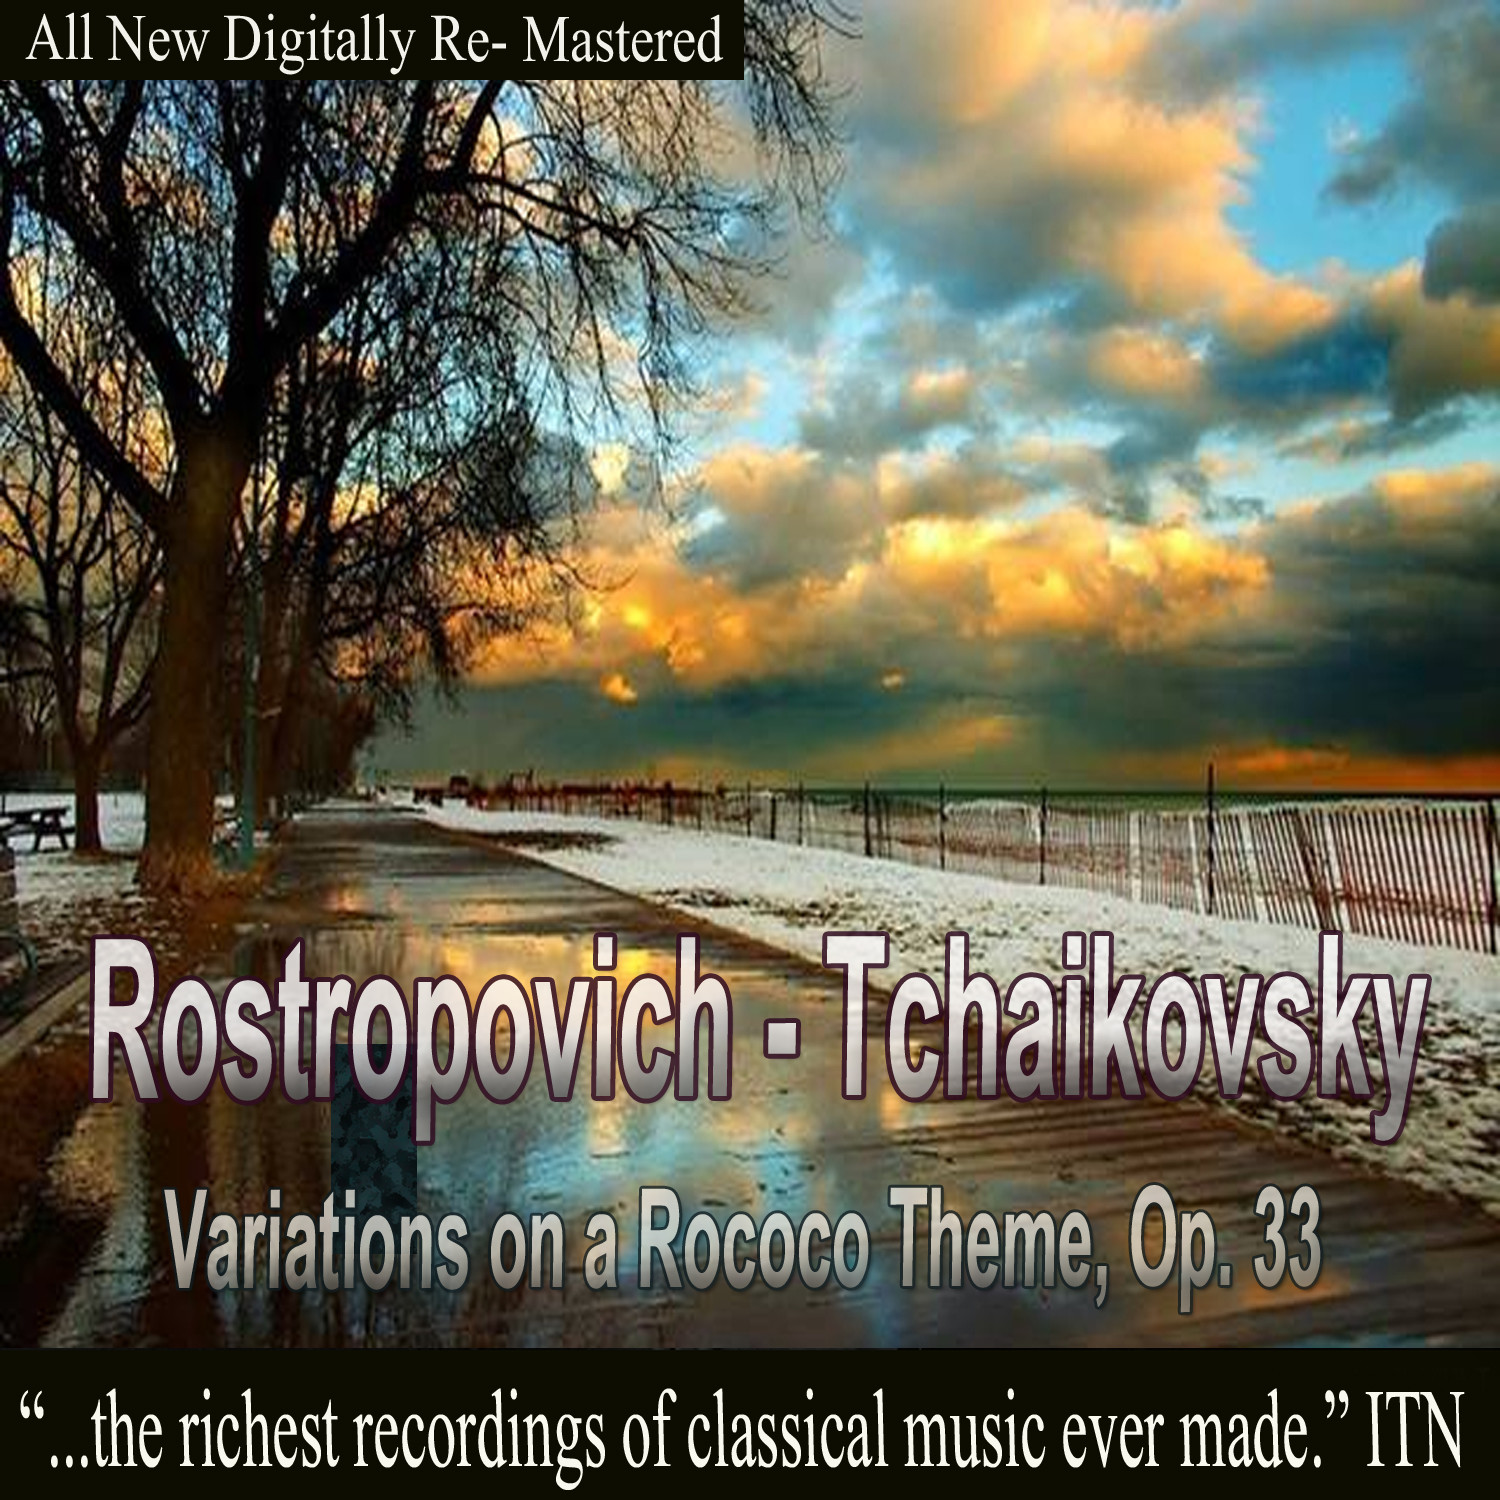 Concerto Rhapsody for Cello and Orchestra, Part 1